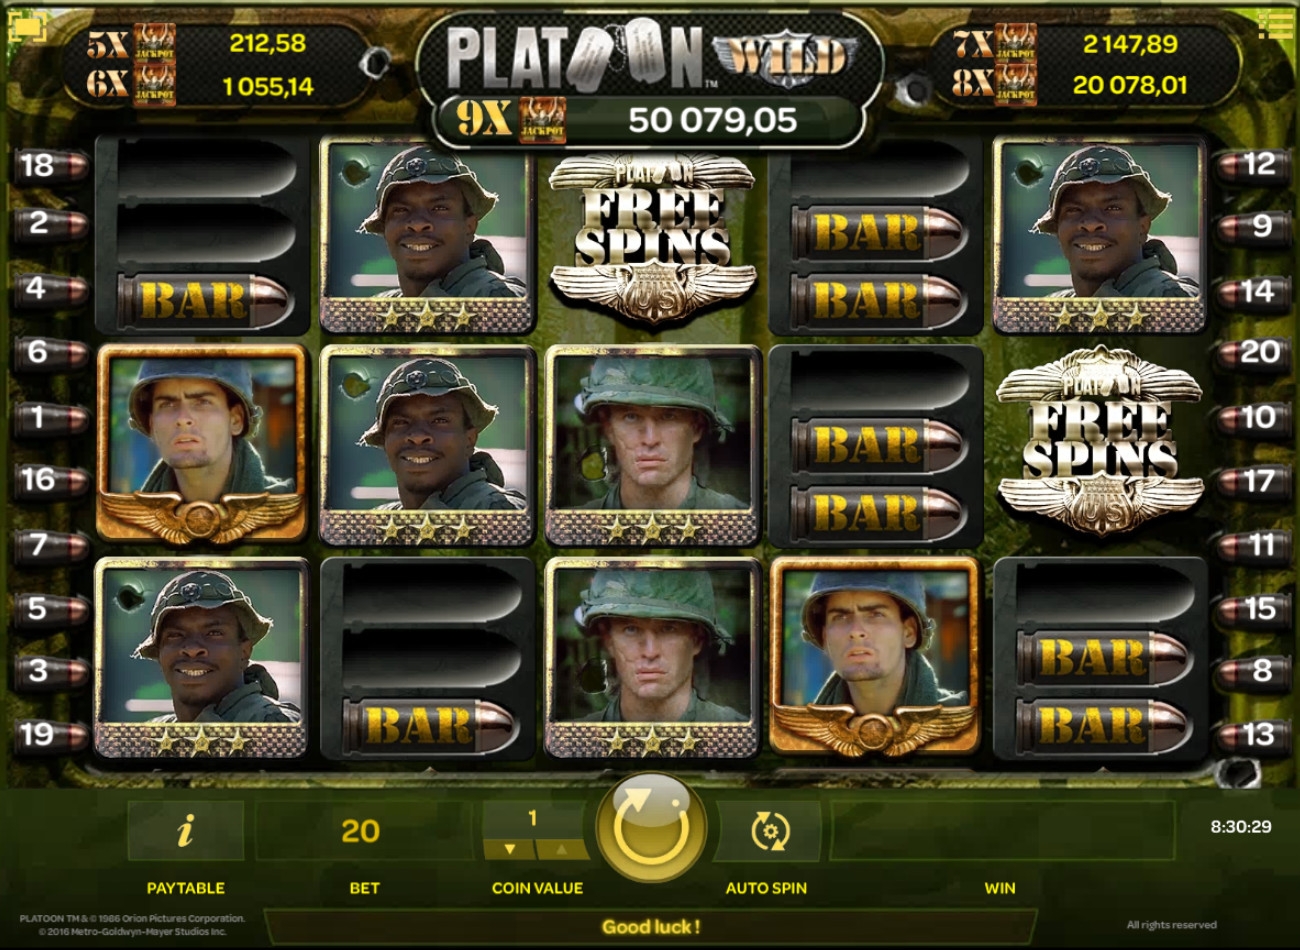 Platoon Wild (Platoon Wild) from category Slots